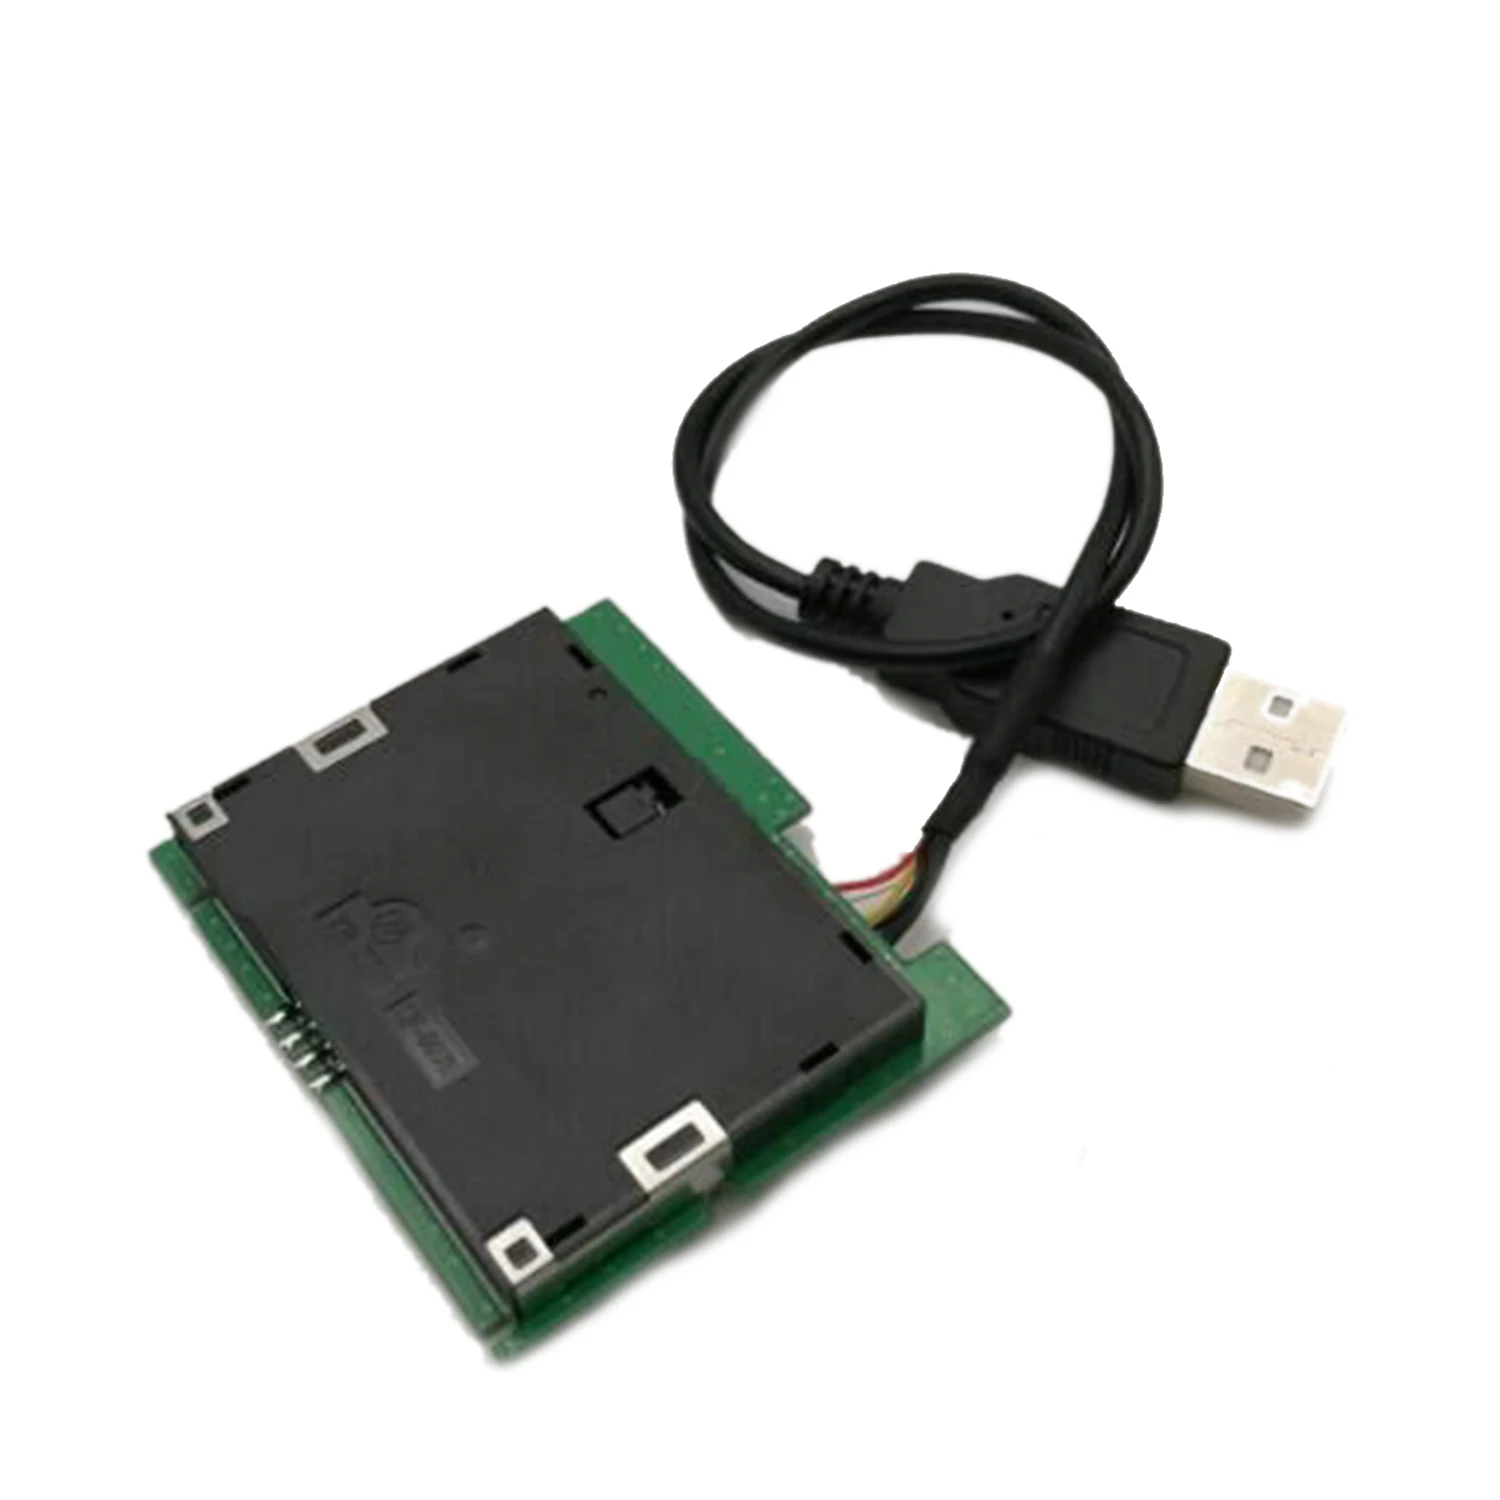 

USB CCID ISO / IEC 7816 PC / SC EMV IC Smart Card Reader Module MCR3521-M